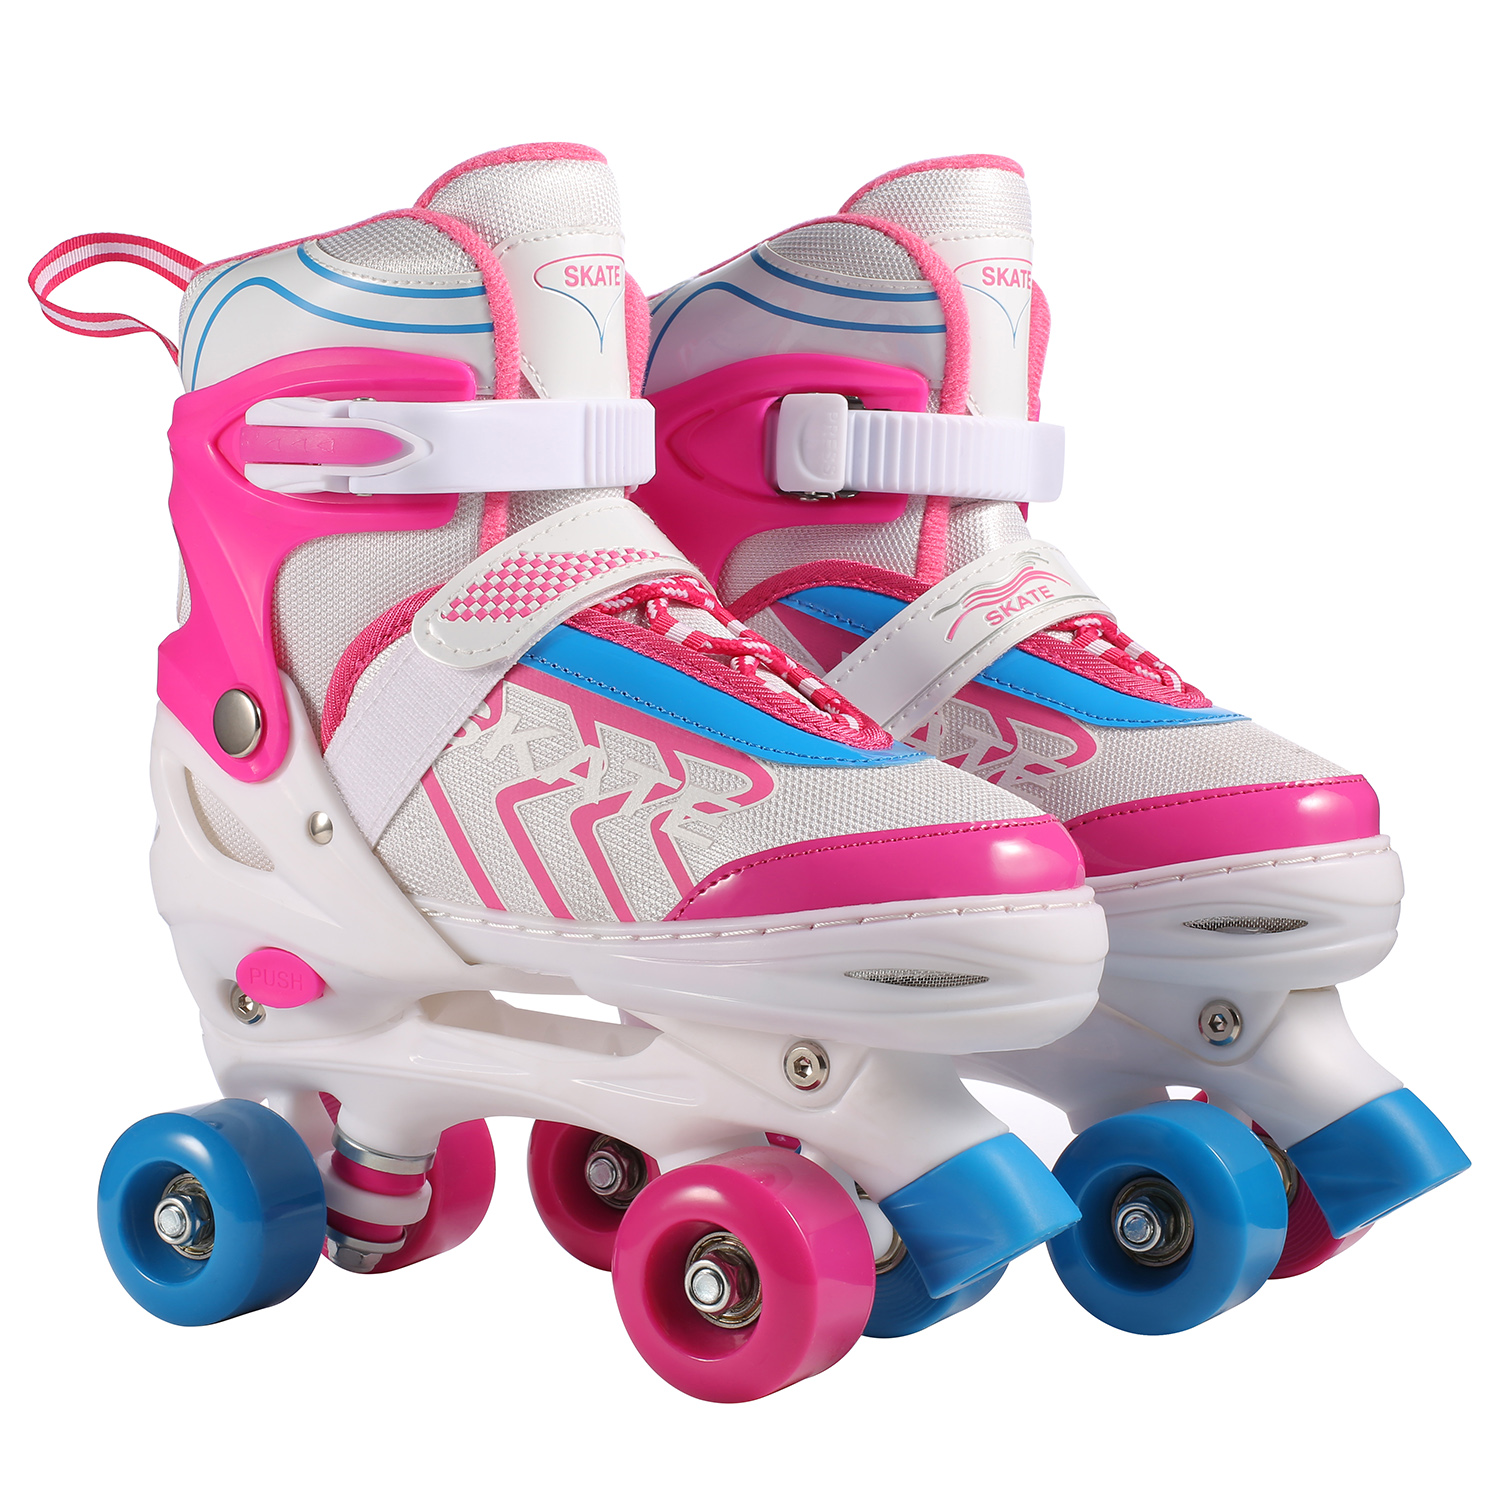 Mädchen Kinder Rollschuhe Quad Roller Skates Verstellbar Inliner SKY ENERO 